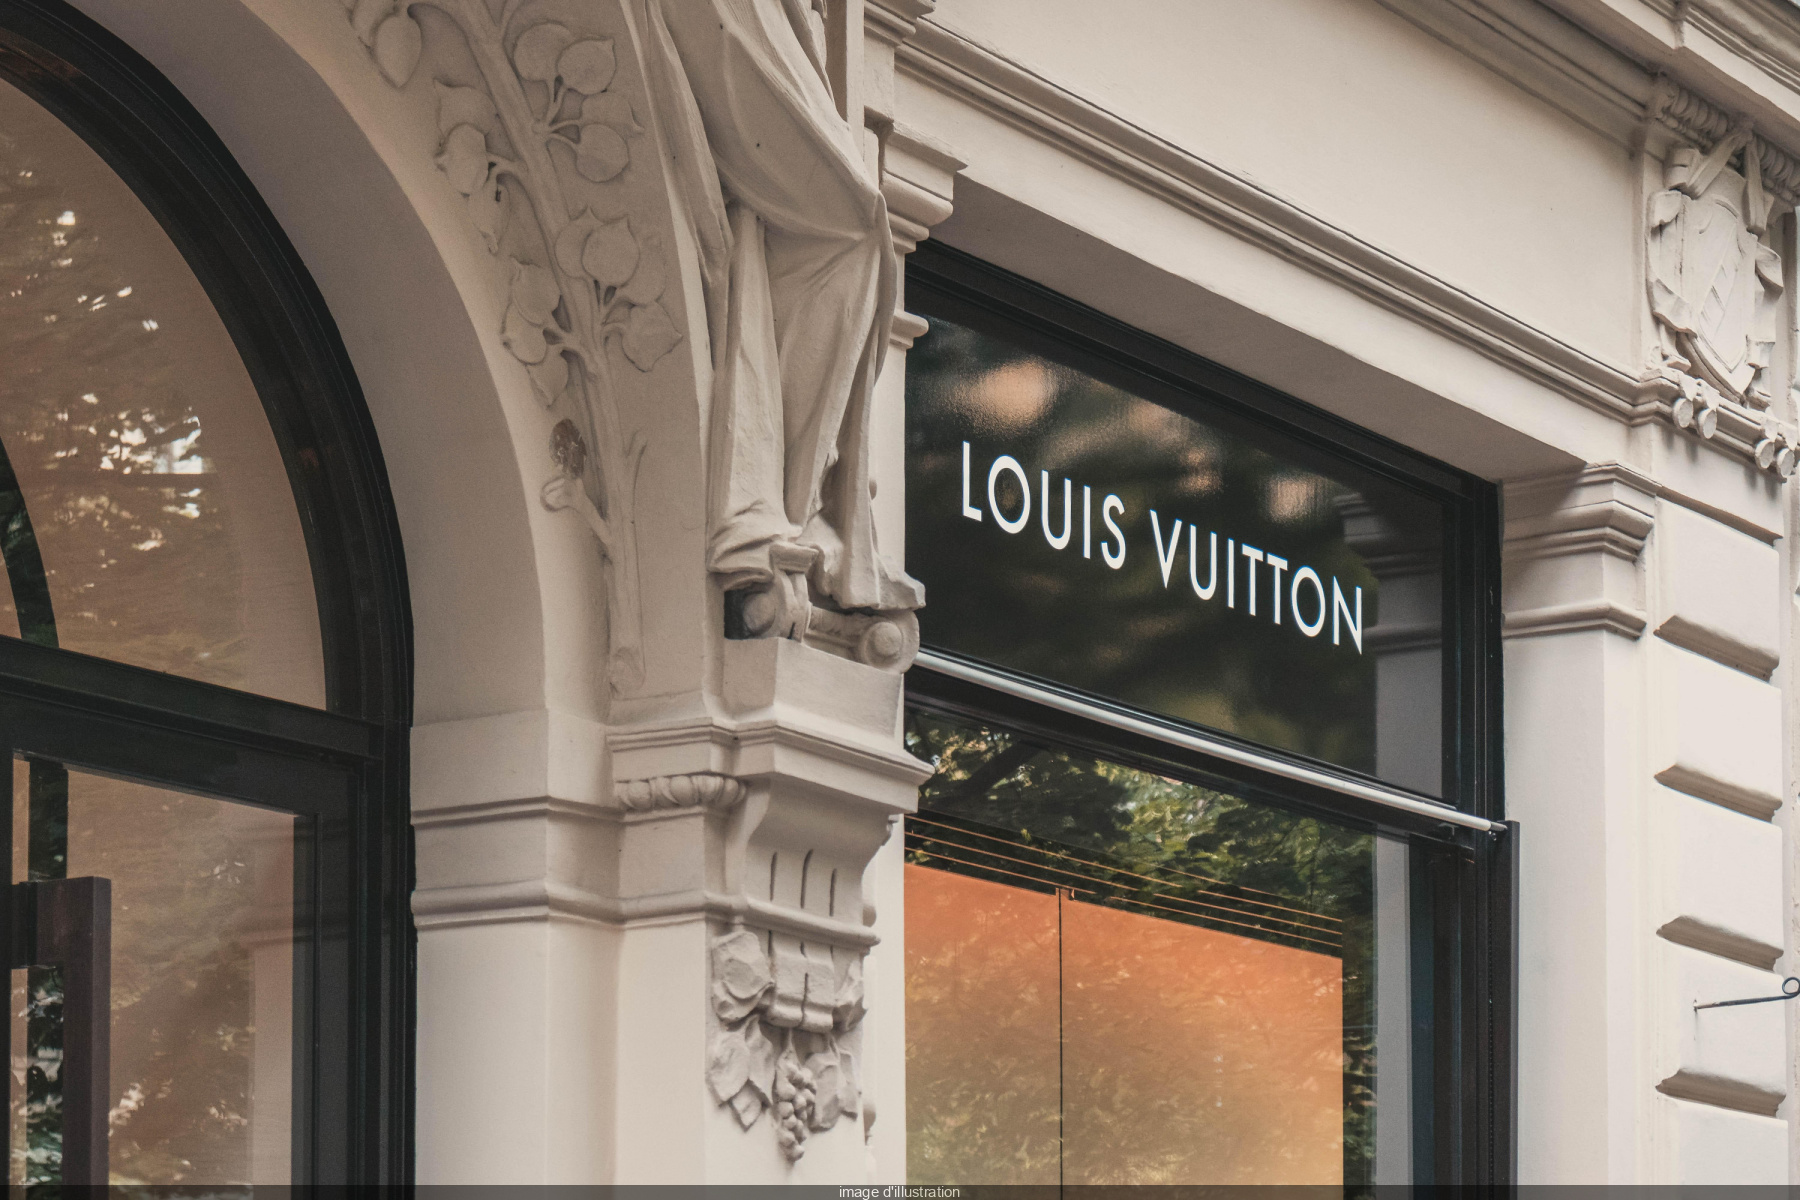 Louis Vuitton returns to its ancestral home at Place Vendôme